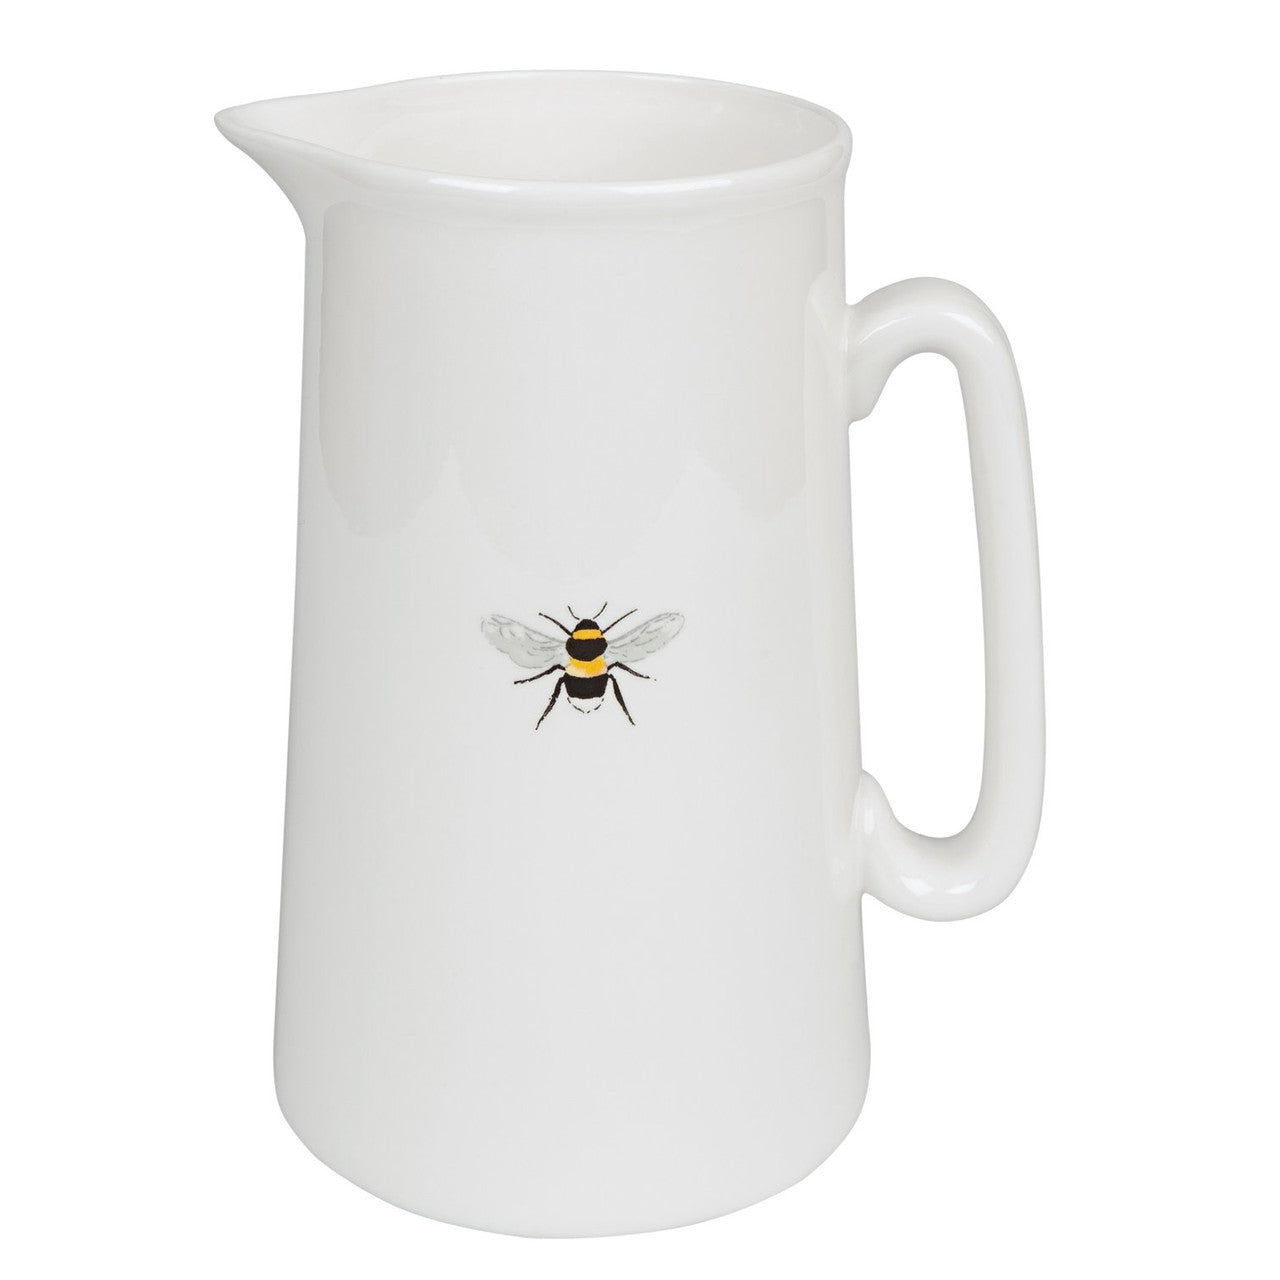 Sophie Allport bone china Bees jug.